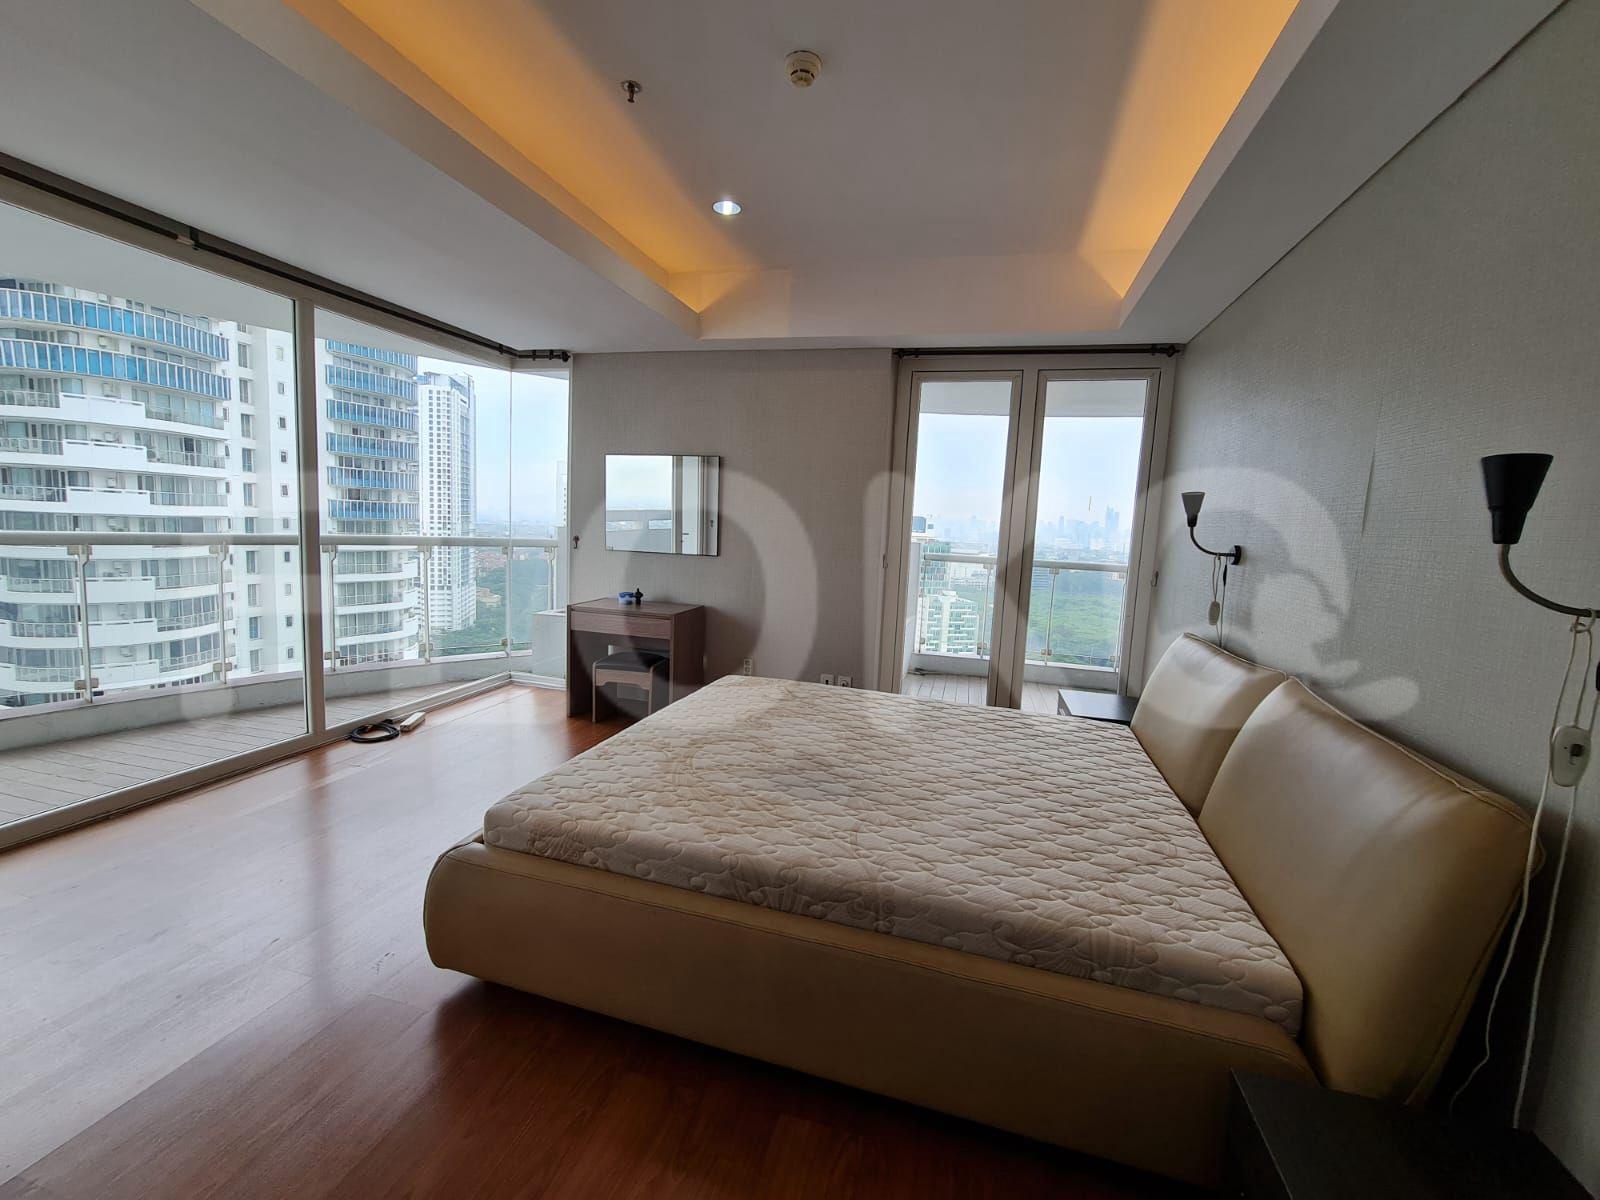 Sewa Apartemen Royale Springhill Residence Tipe 3 Kamar Tidur di Lantai 30 fkec11